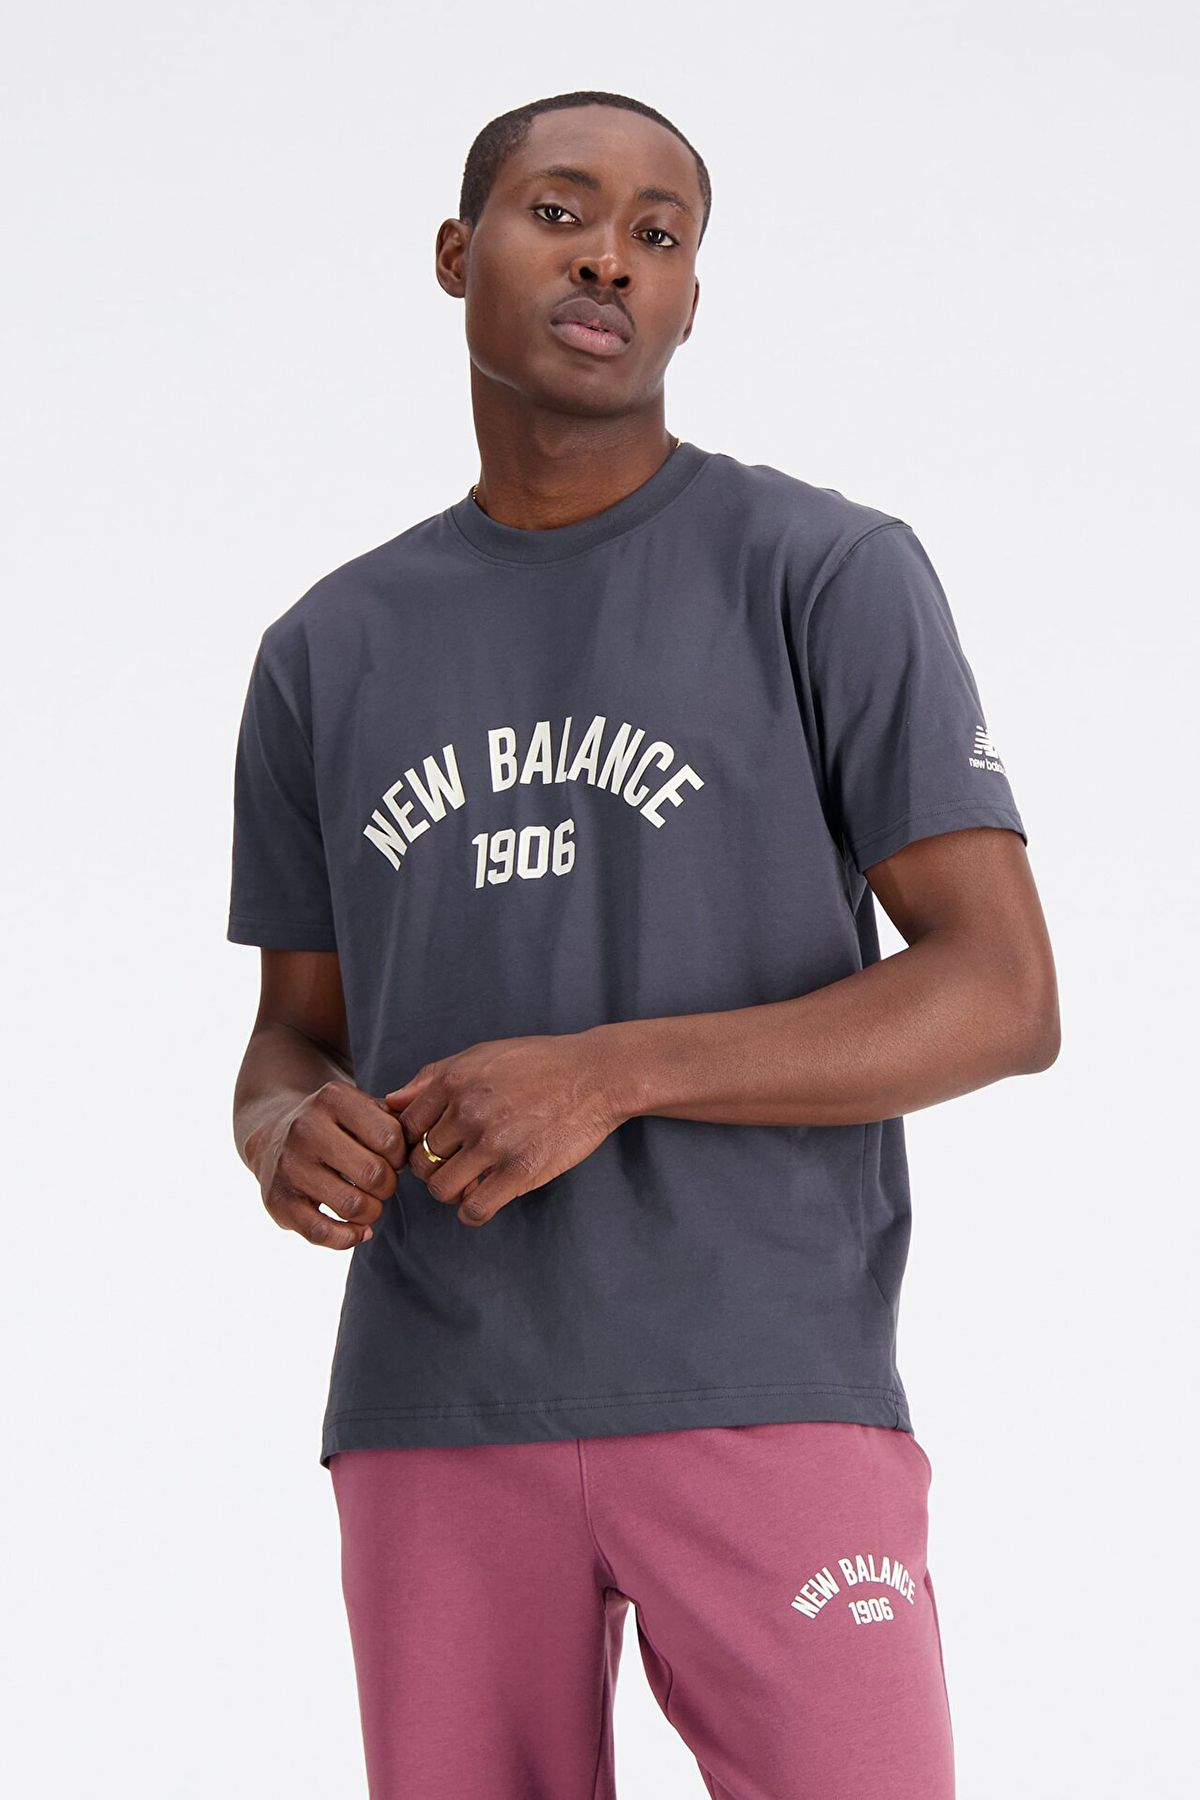 New Balance NB Mens Lifestyle T Shirt Erkek T SHİRT MNT1406ANT